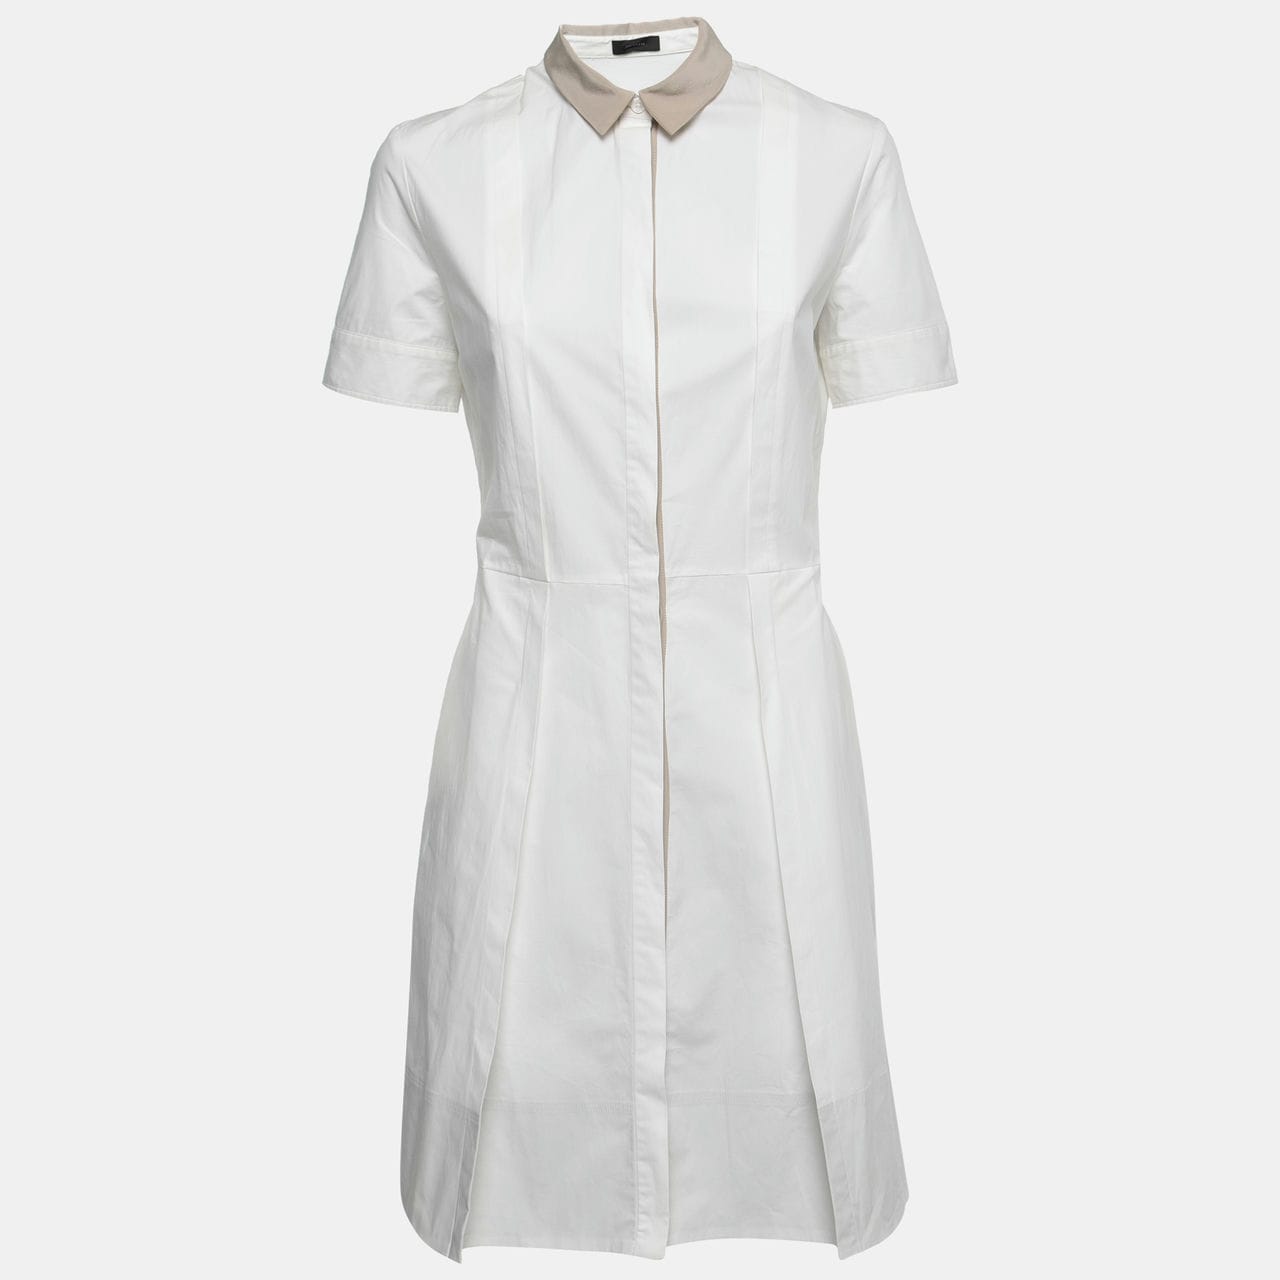 white cotton dress for summer